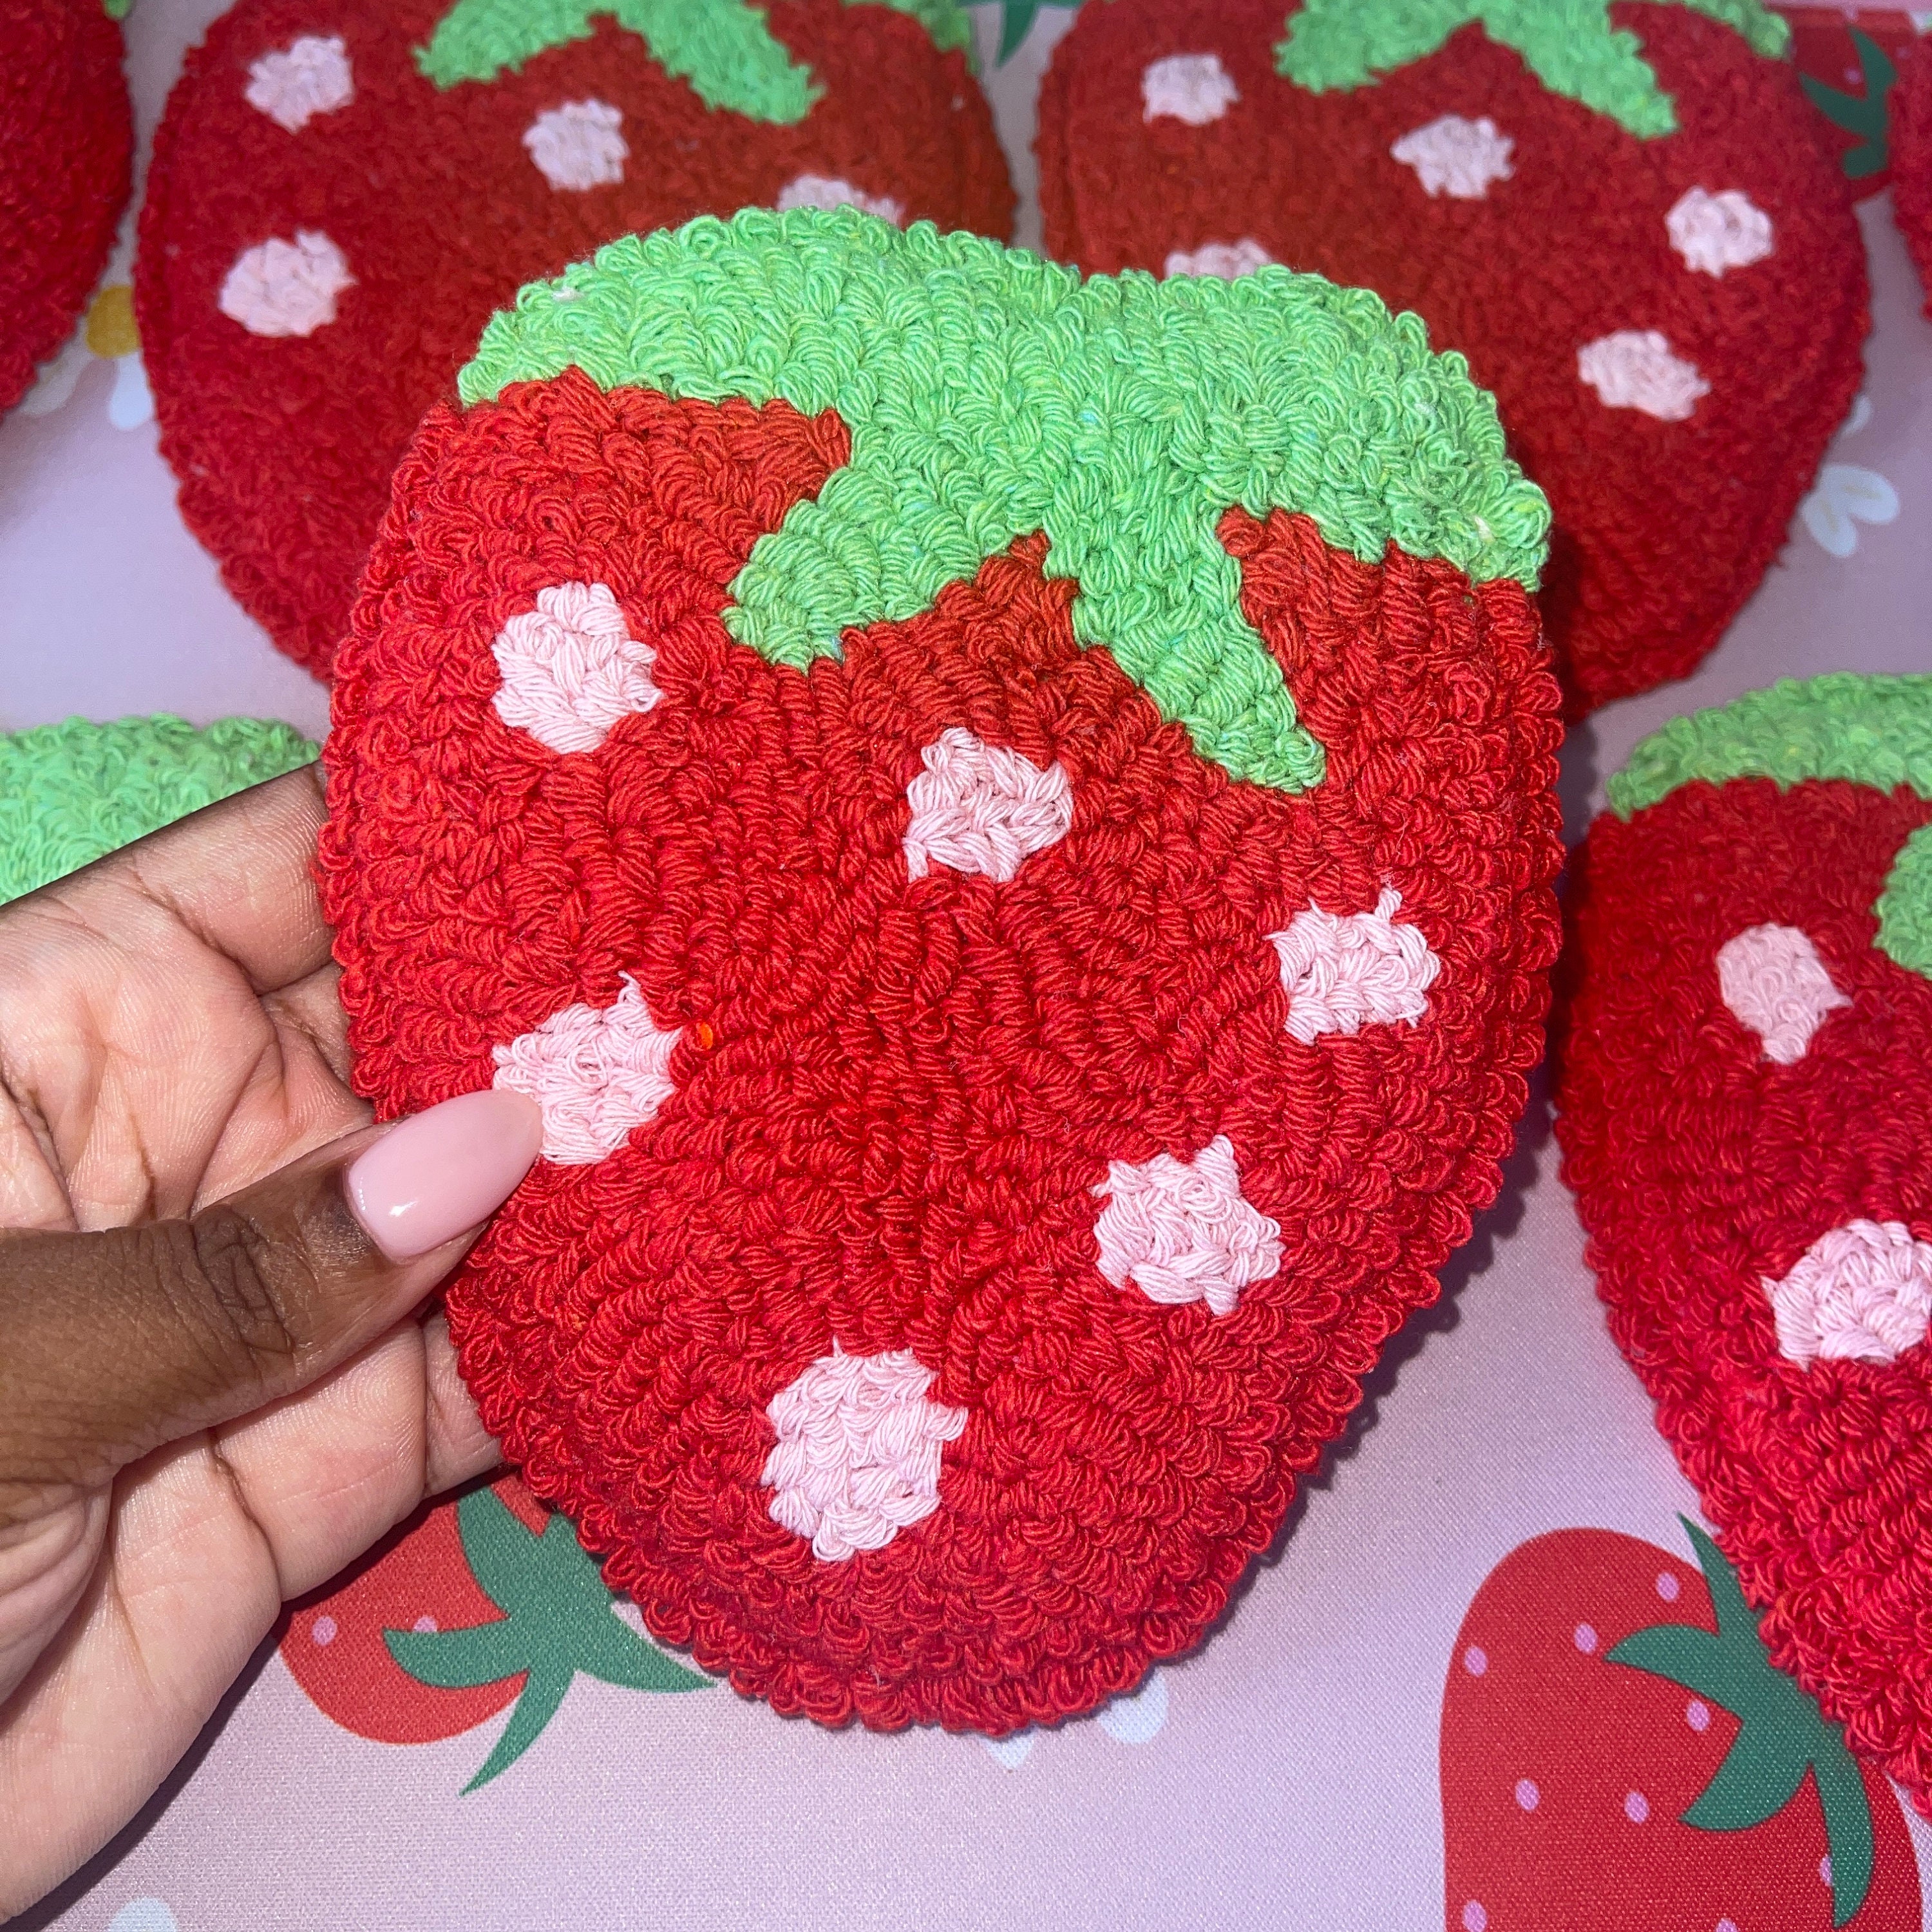 Crowberry Crafts Crowberry - Felt Hearts